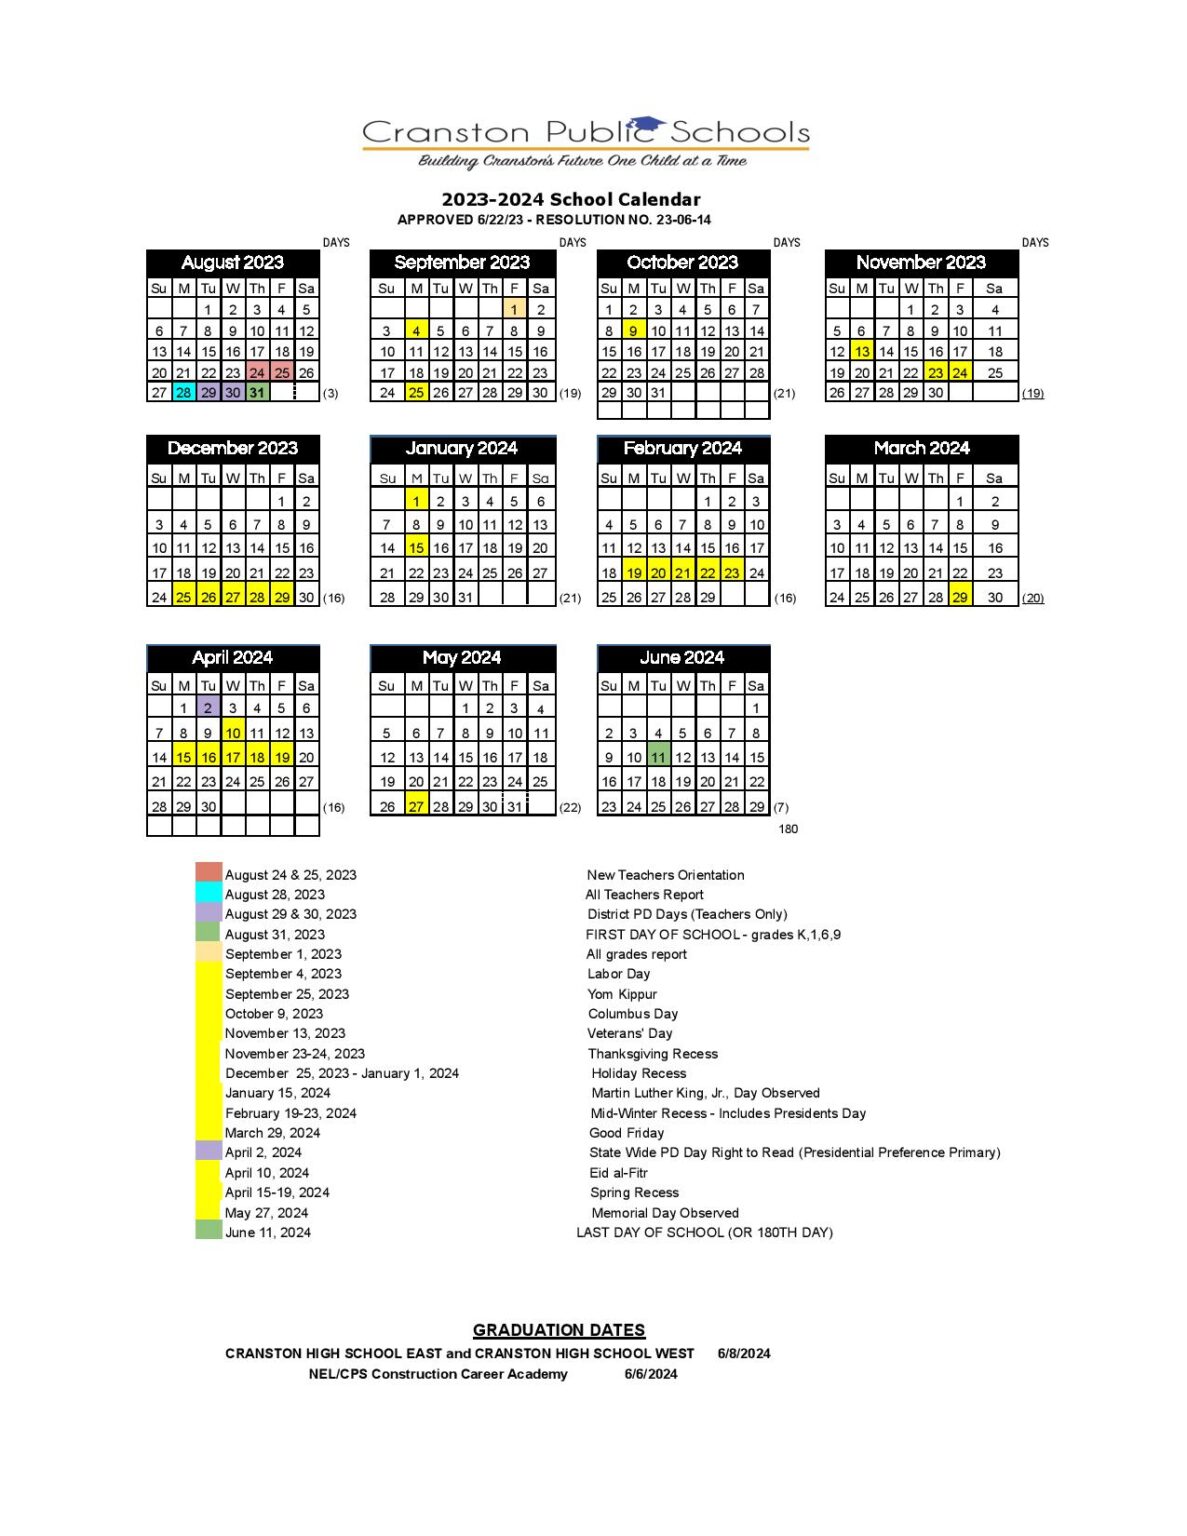 Cranston Public Schools Calendar 20232024 in PDF School Calendar Info